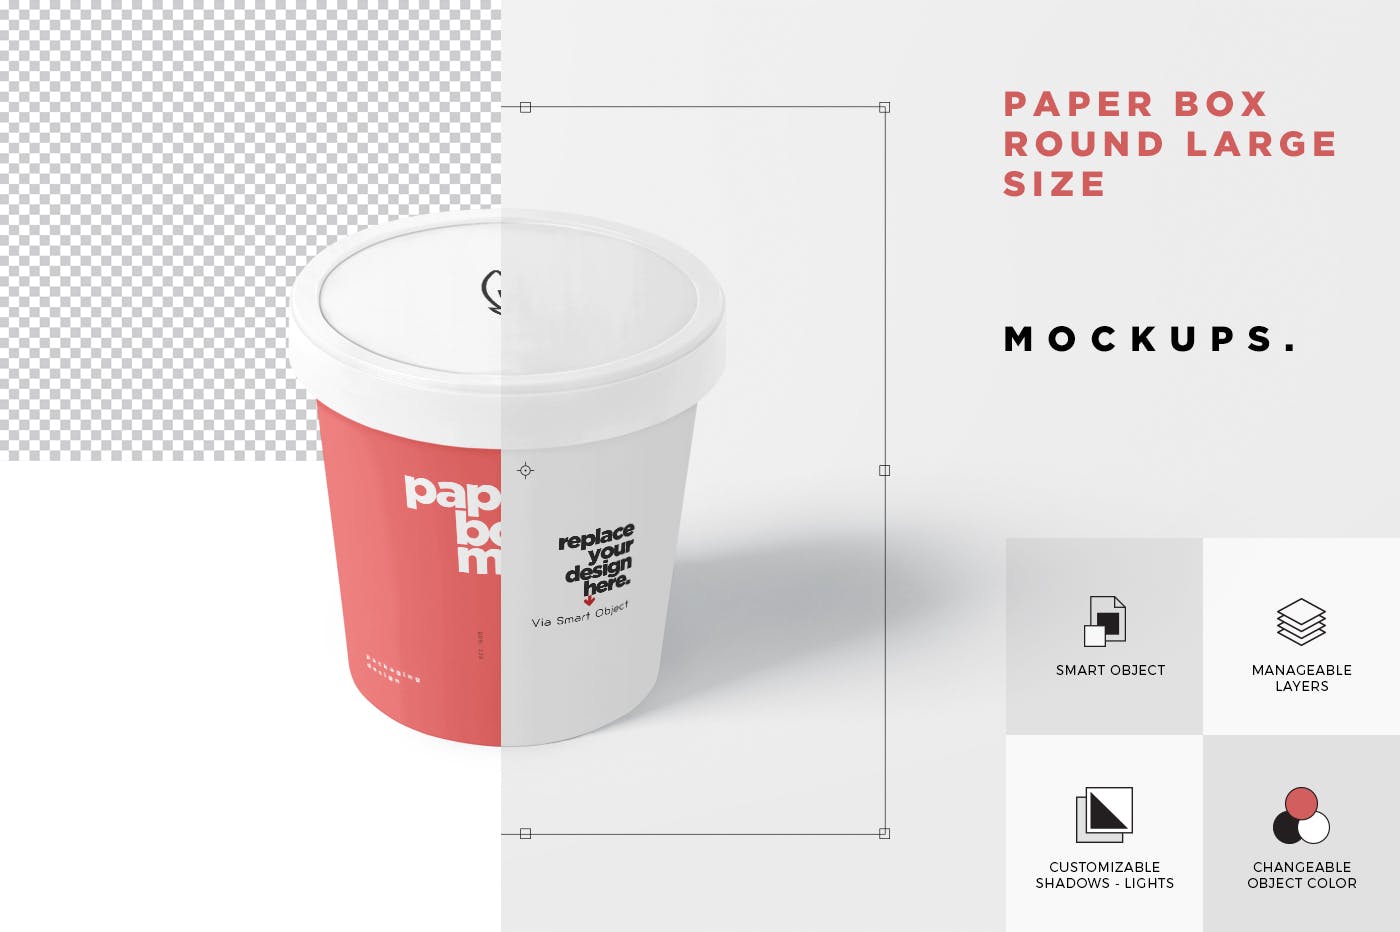 桶状纸筒包装设计效果图样机模板 Paper Box Mockup PSDs Round – Large Size插图6